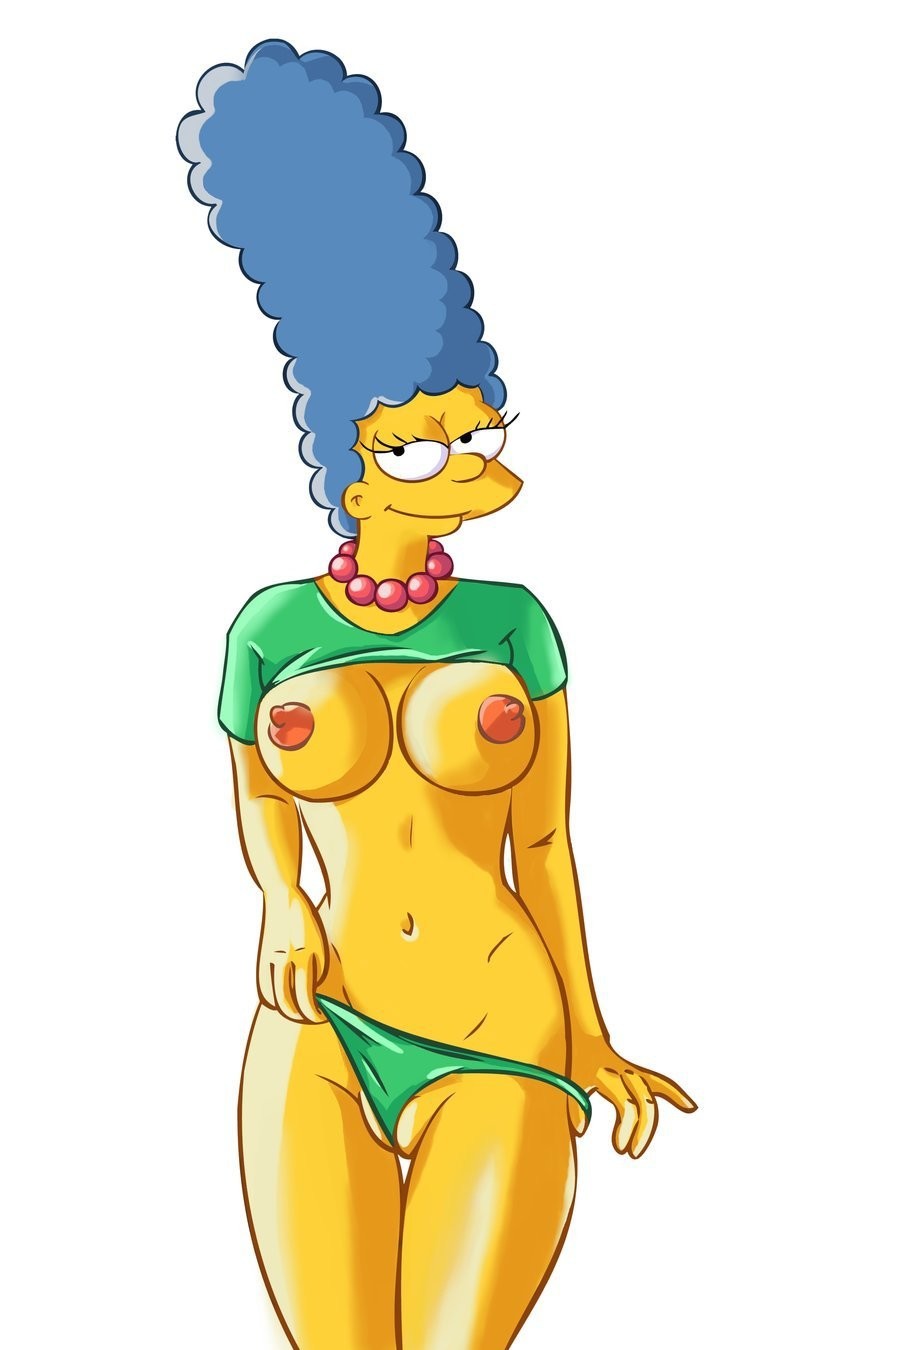 Read Marge Simpson Hentai Hentai Online Porn Manga And Doujinshi